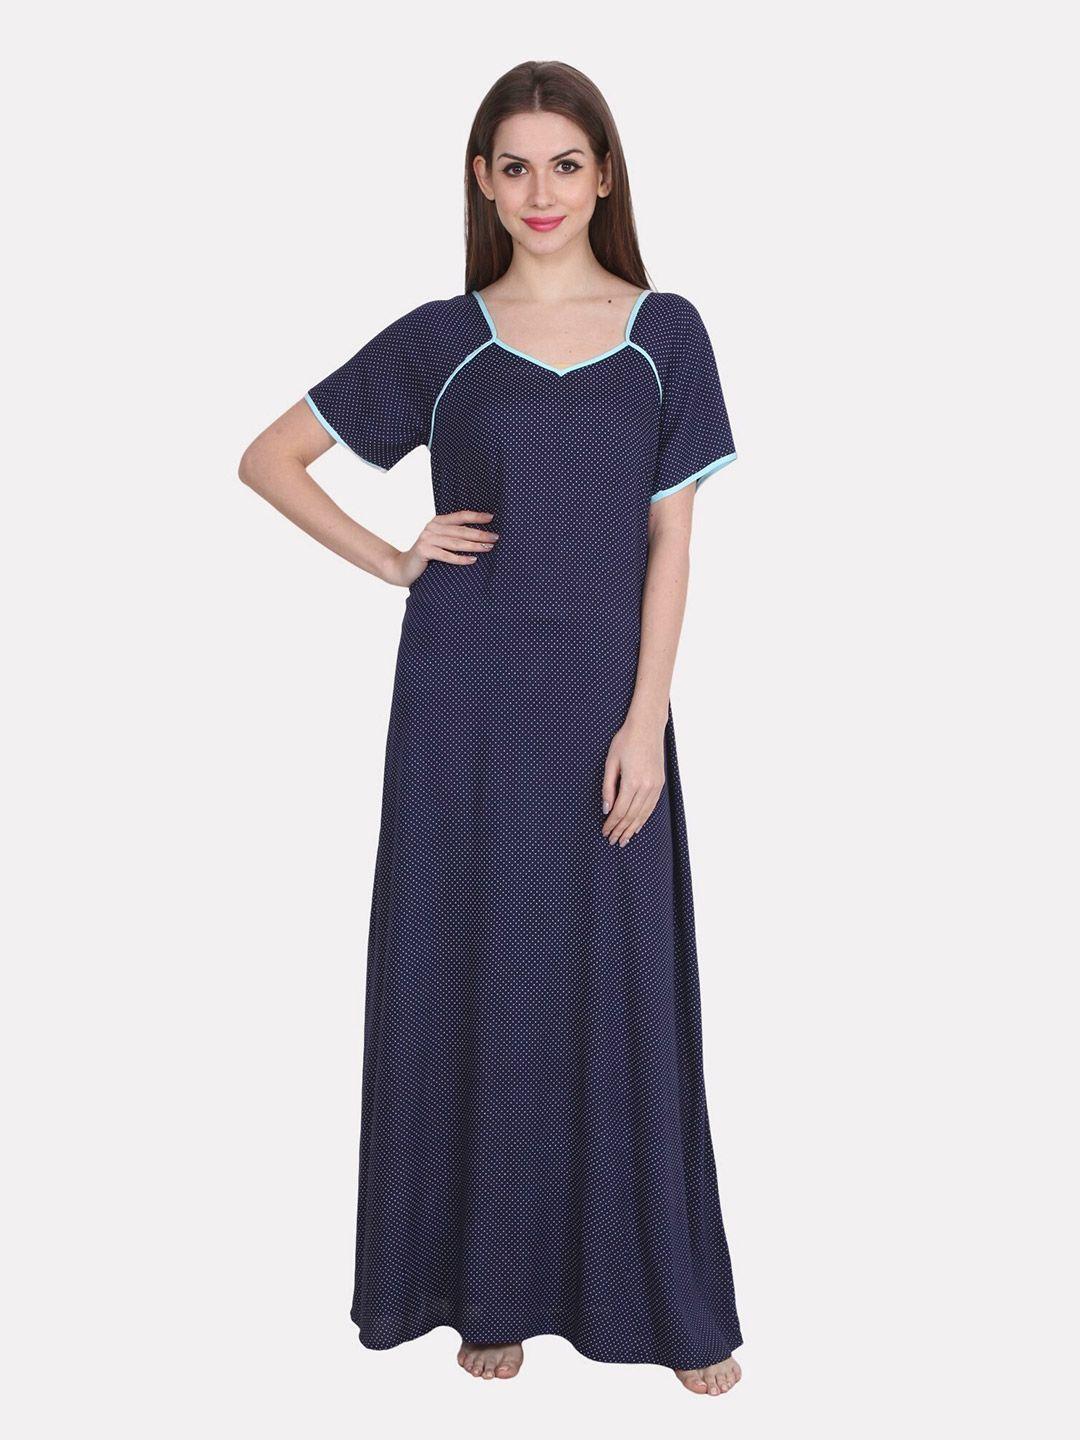 patrorna-navy-blue-printed-maxi-nightdress